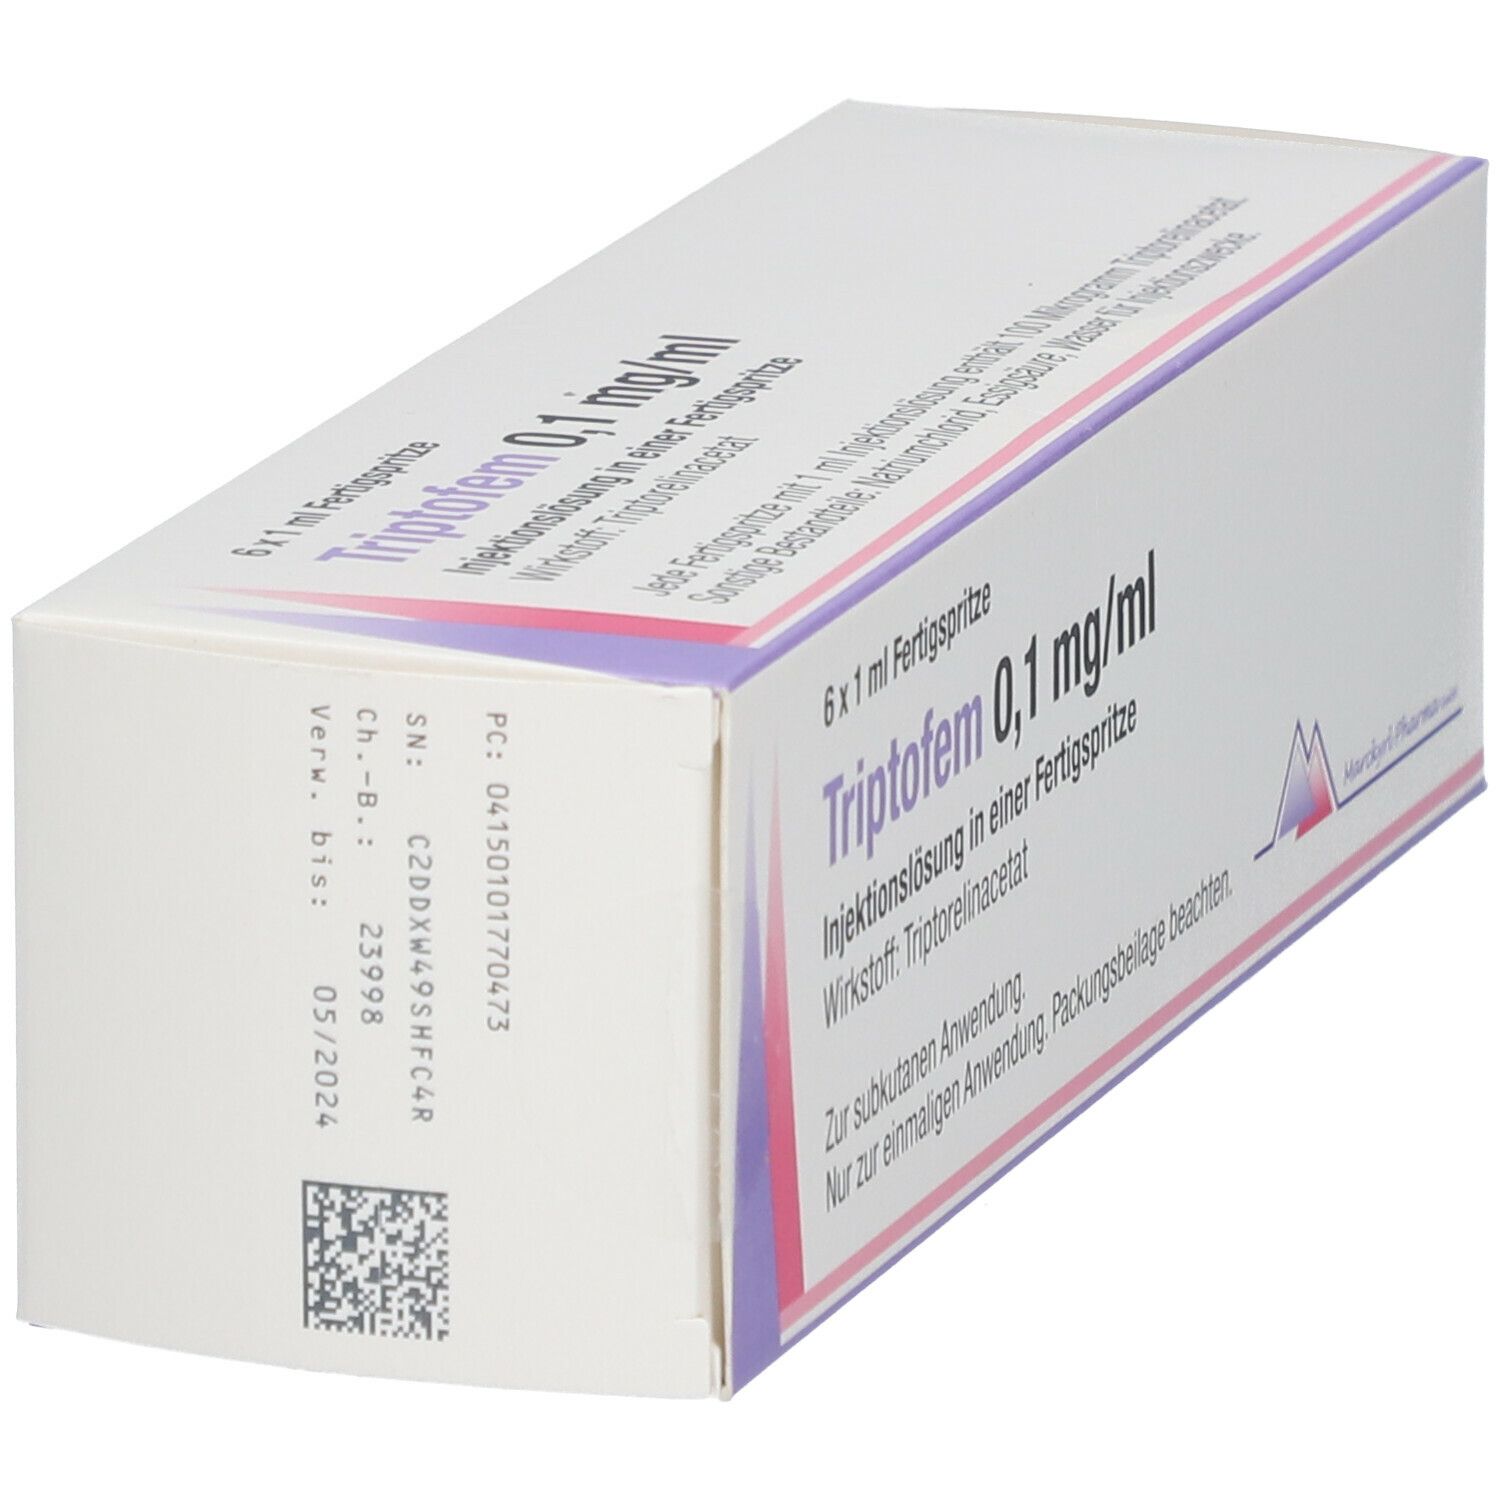 Triptofem 0,1 mg/ml